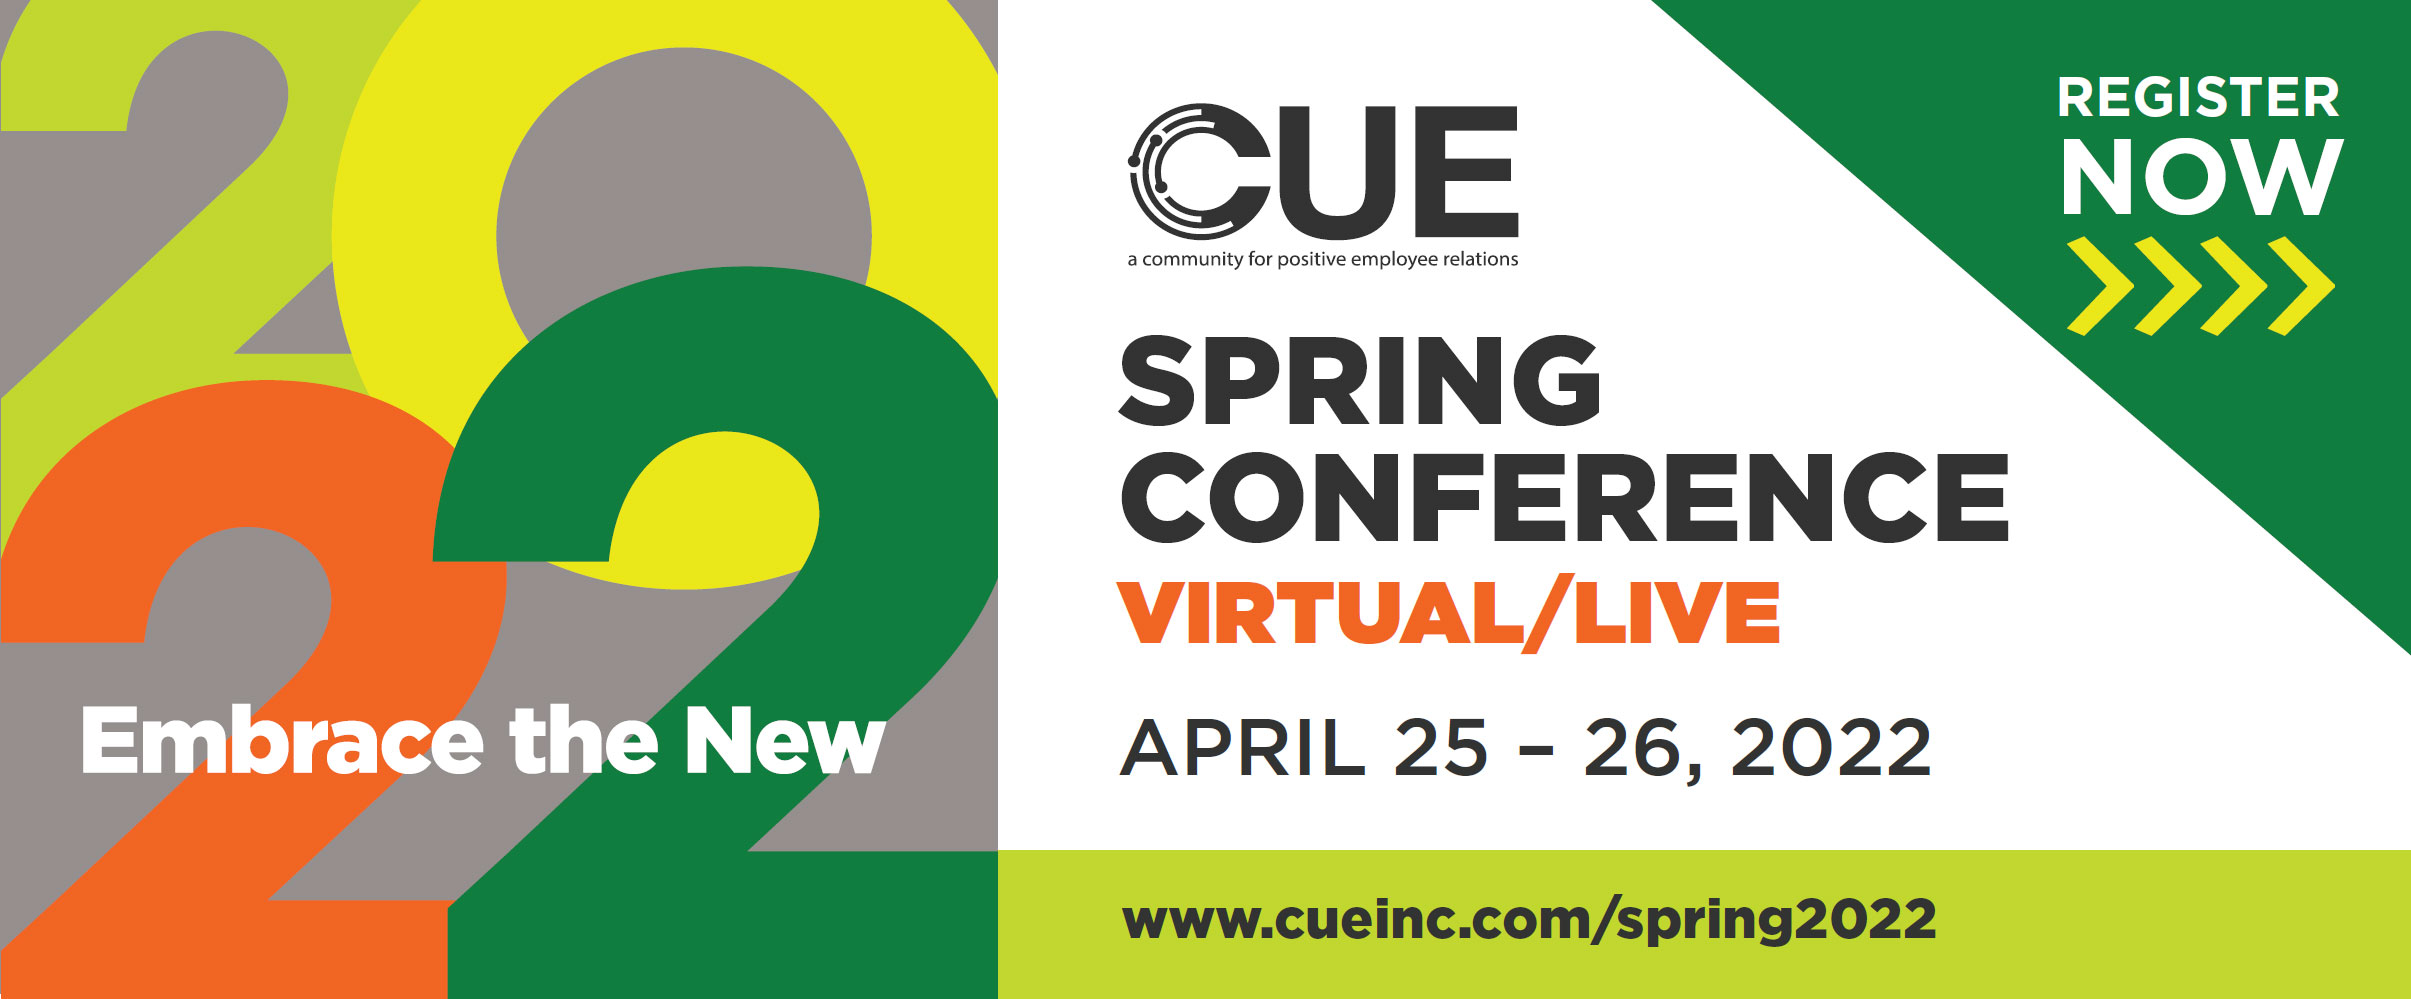 Spring 2022 CUE Conference